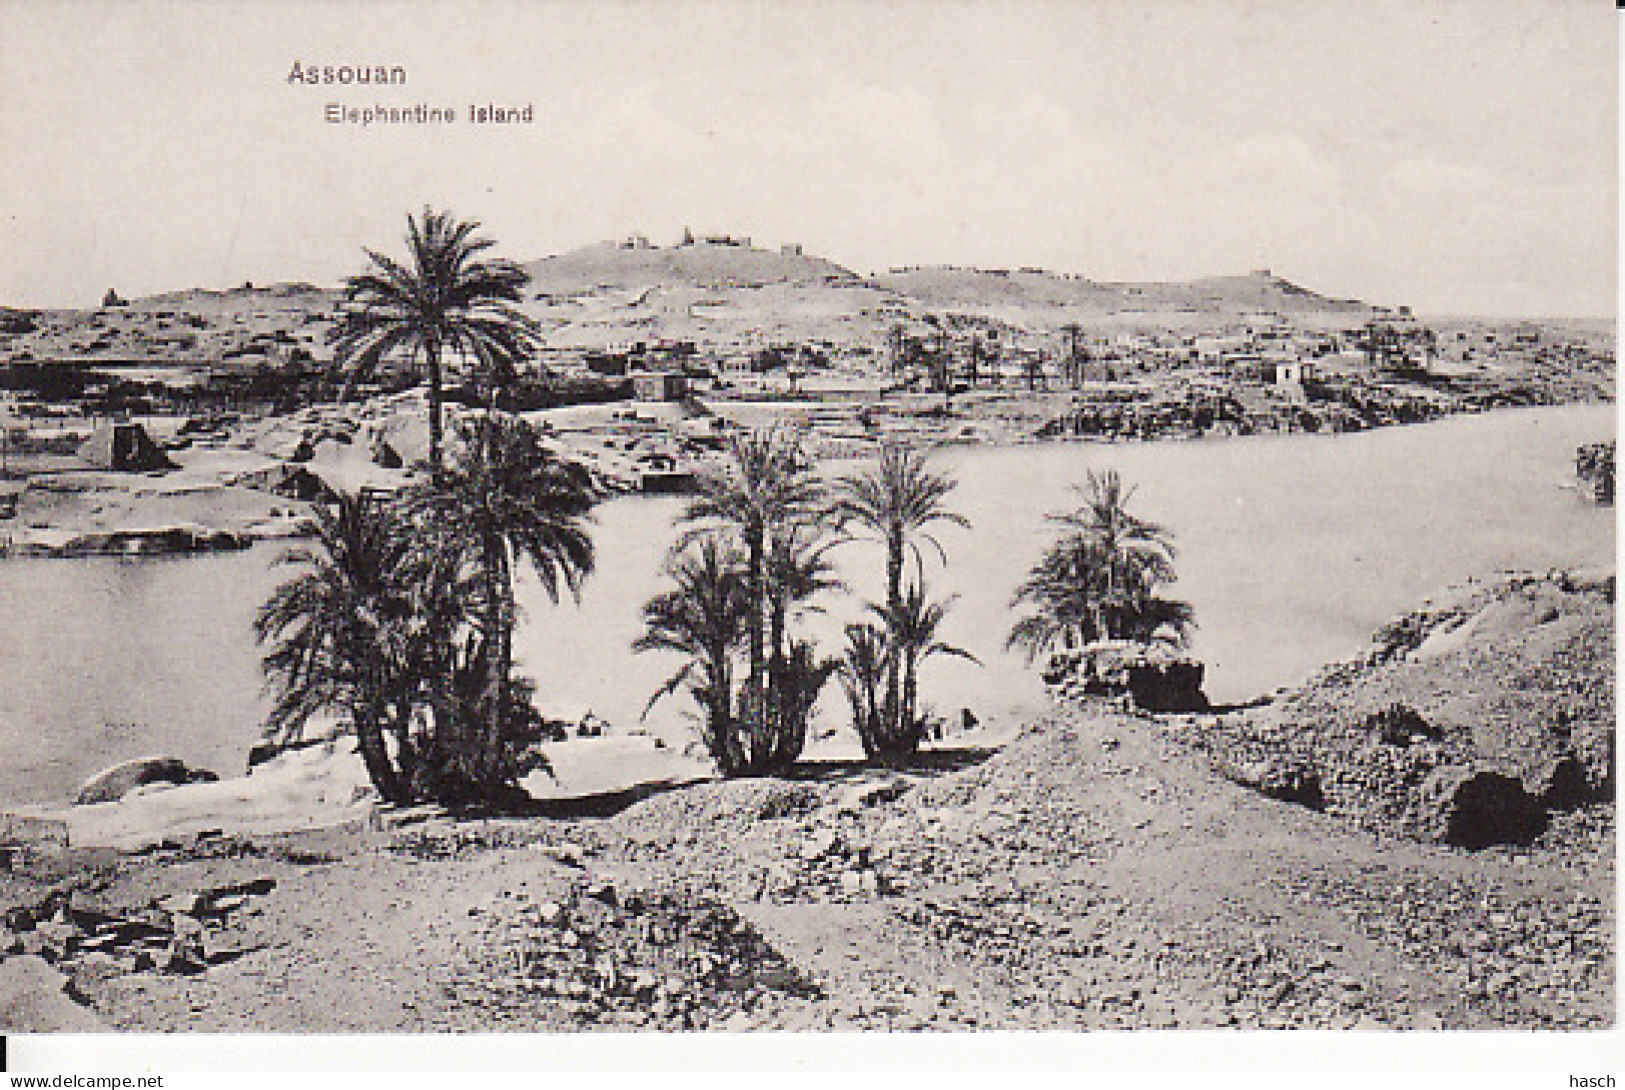 2815	49	Assouan, Elephantine Island  - Aswan